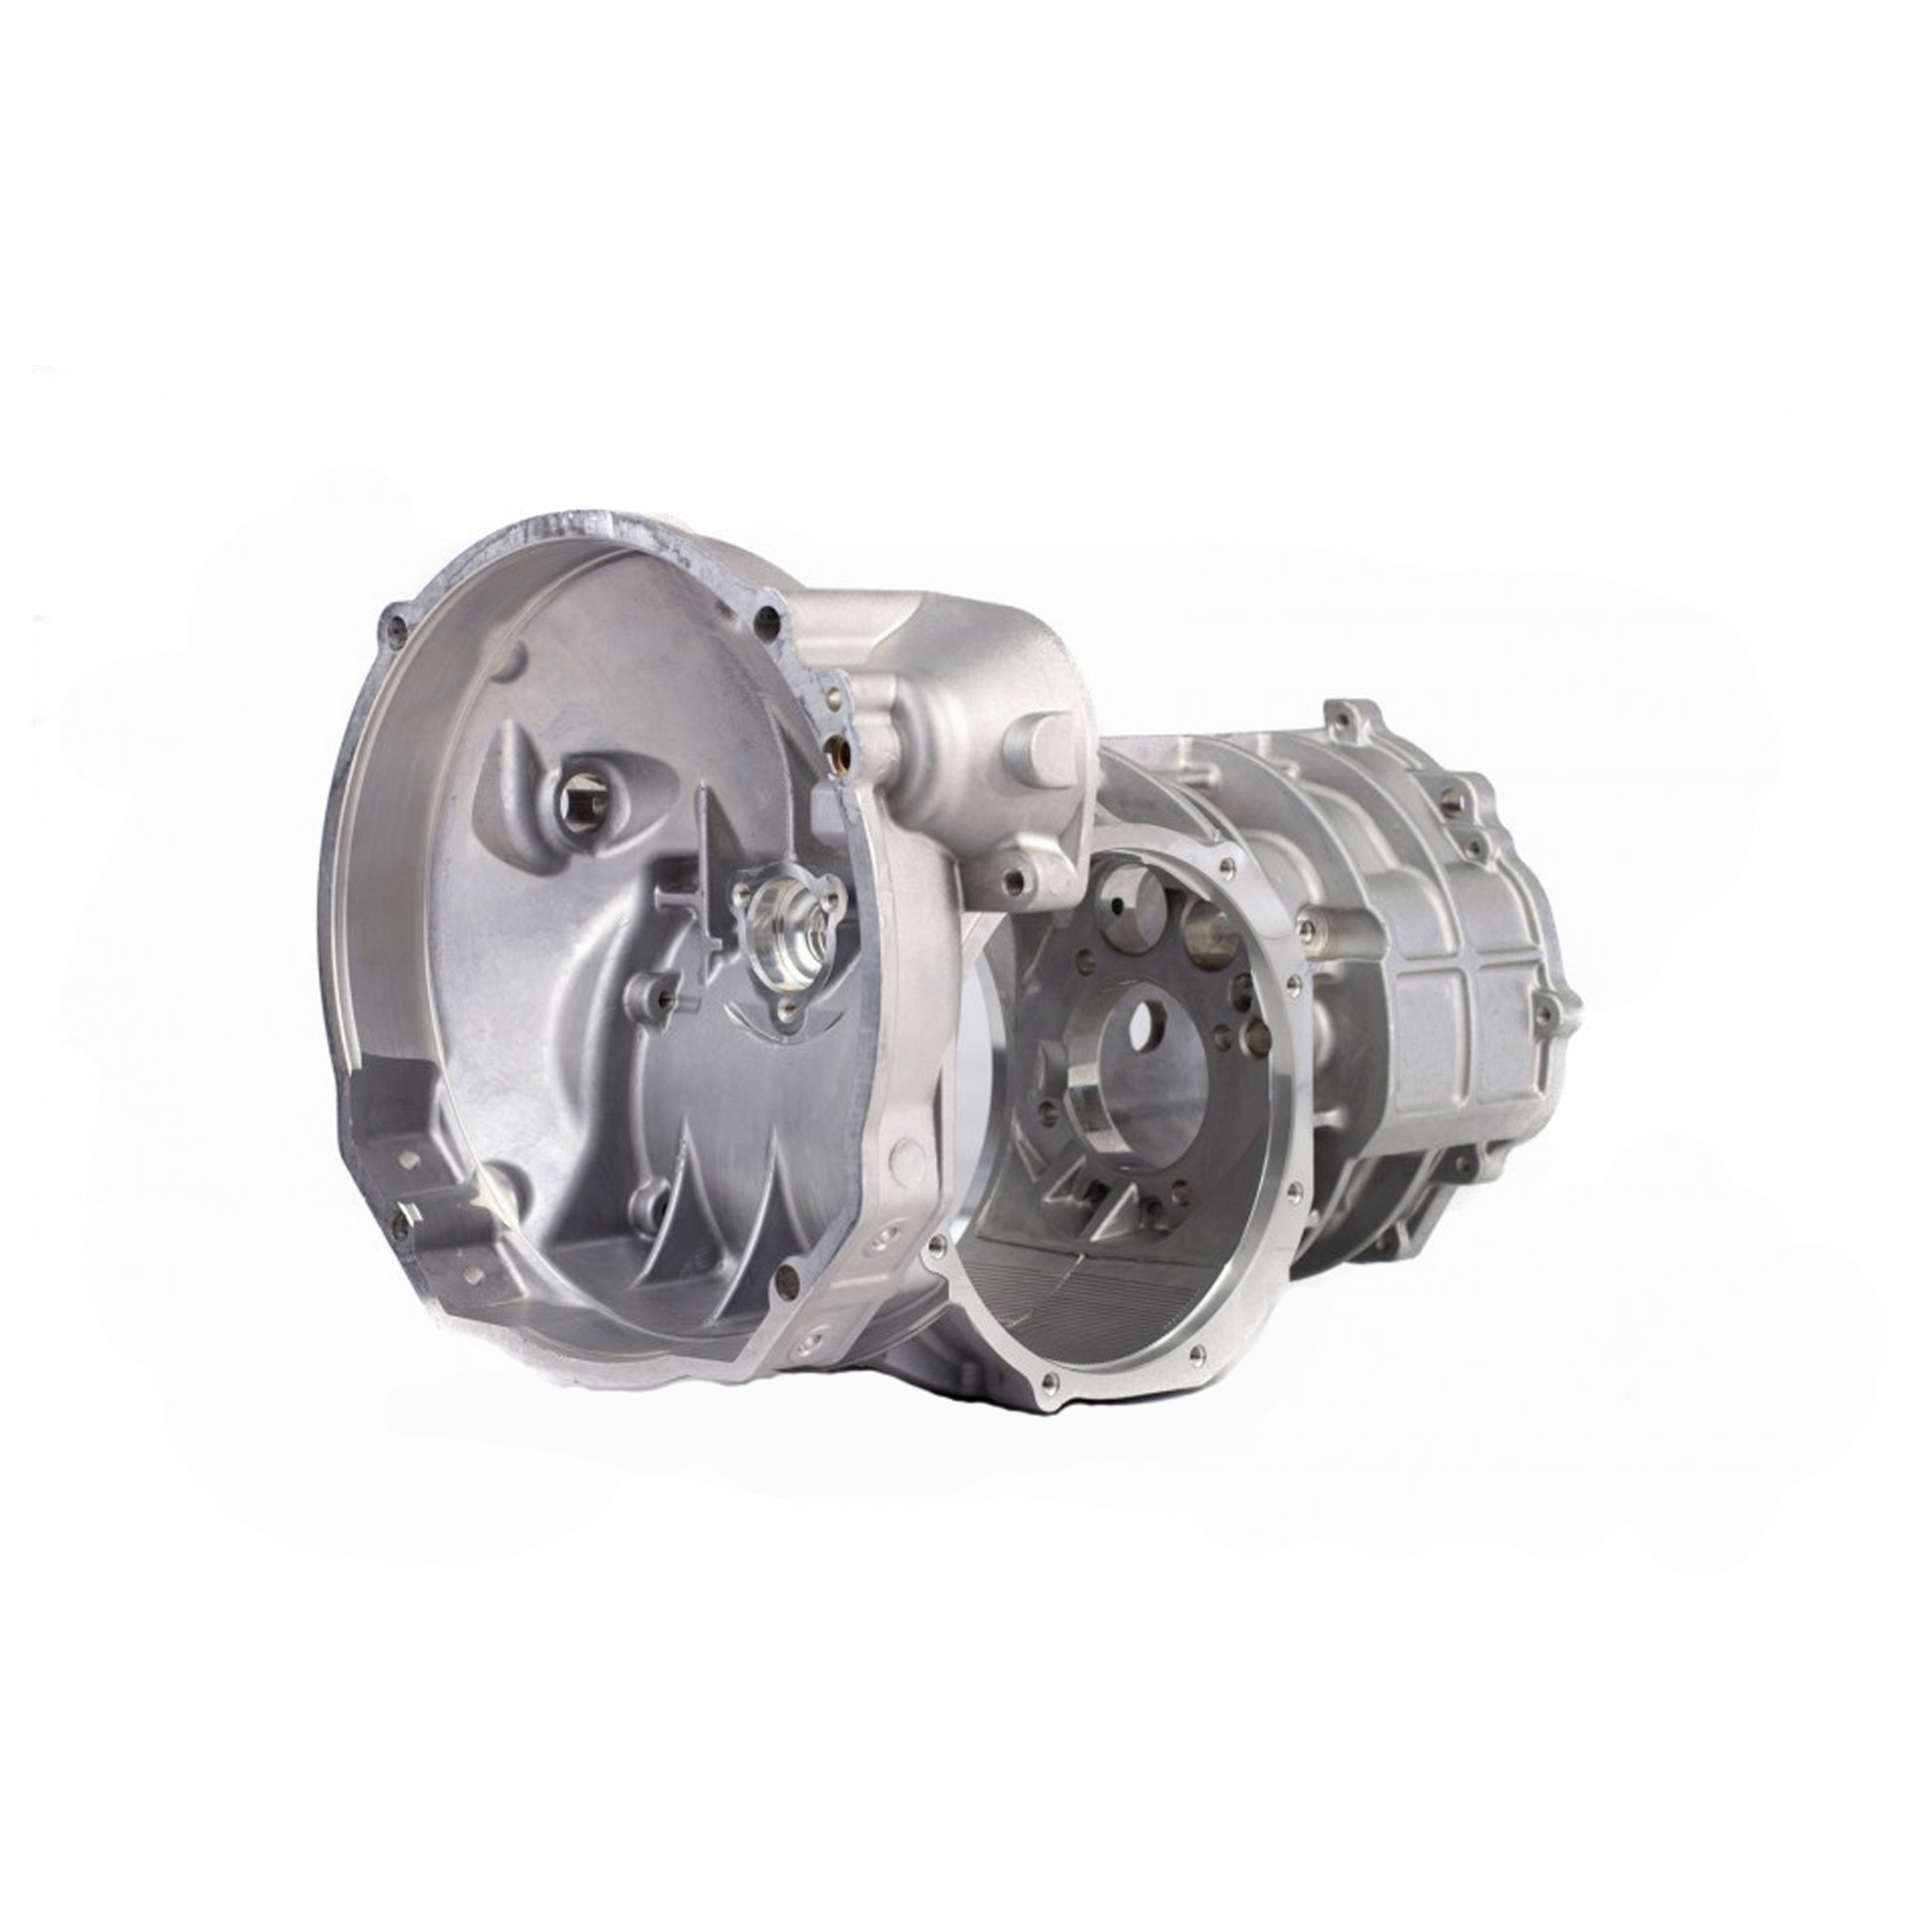 Matech Factory Custom Aluminum Low Pressure Casting Engine Block Cylinders(图21)